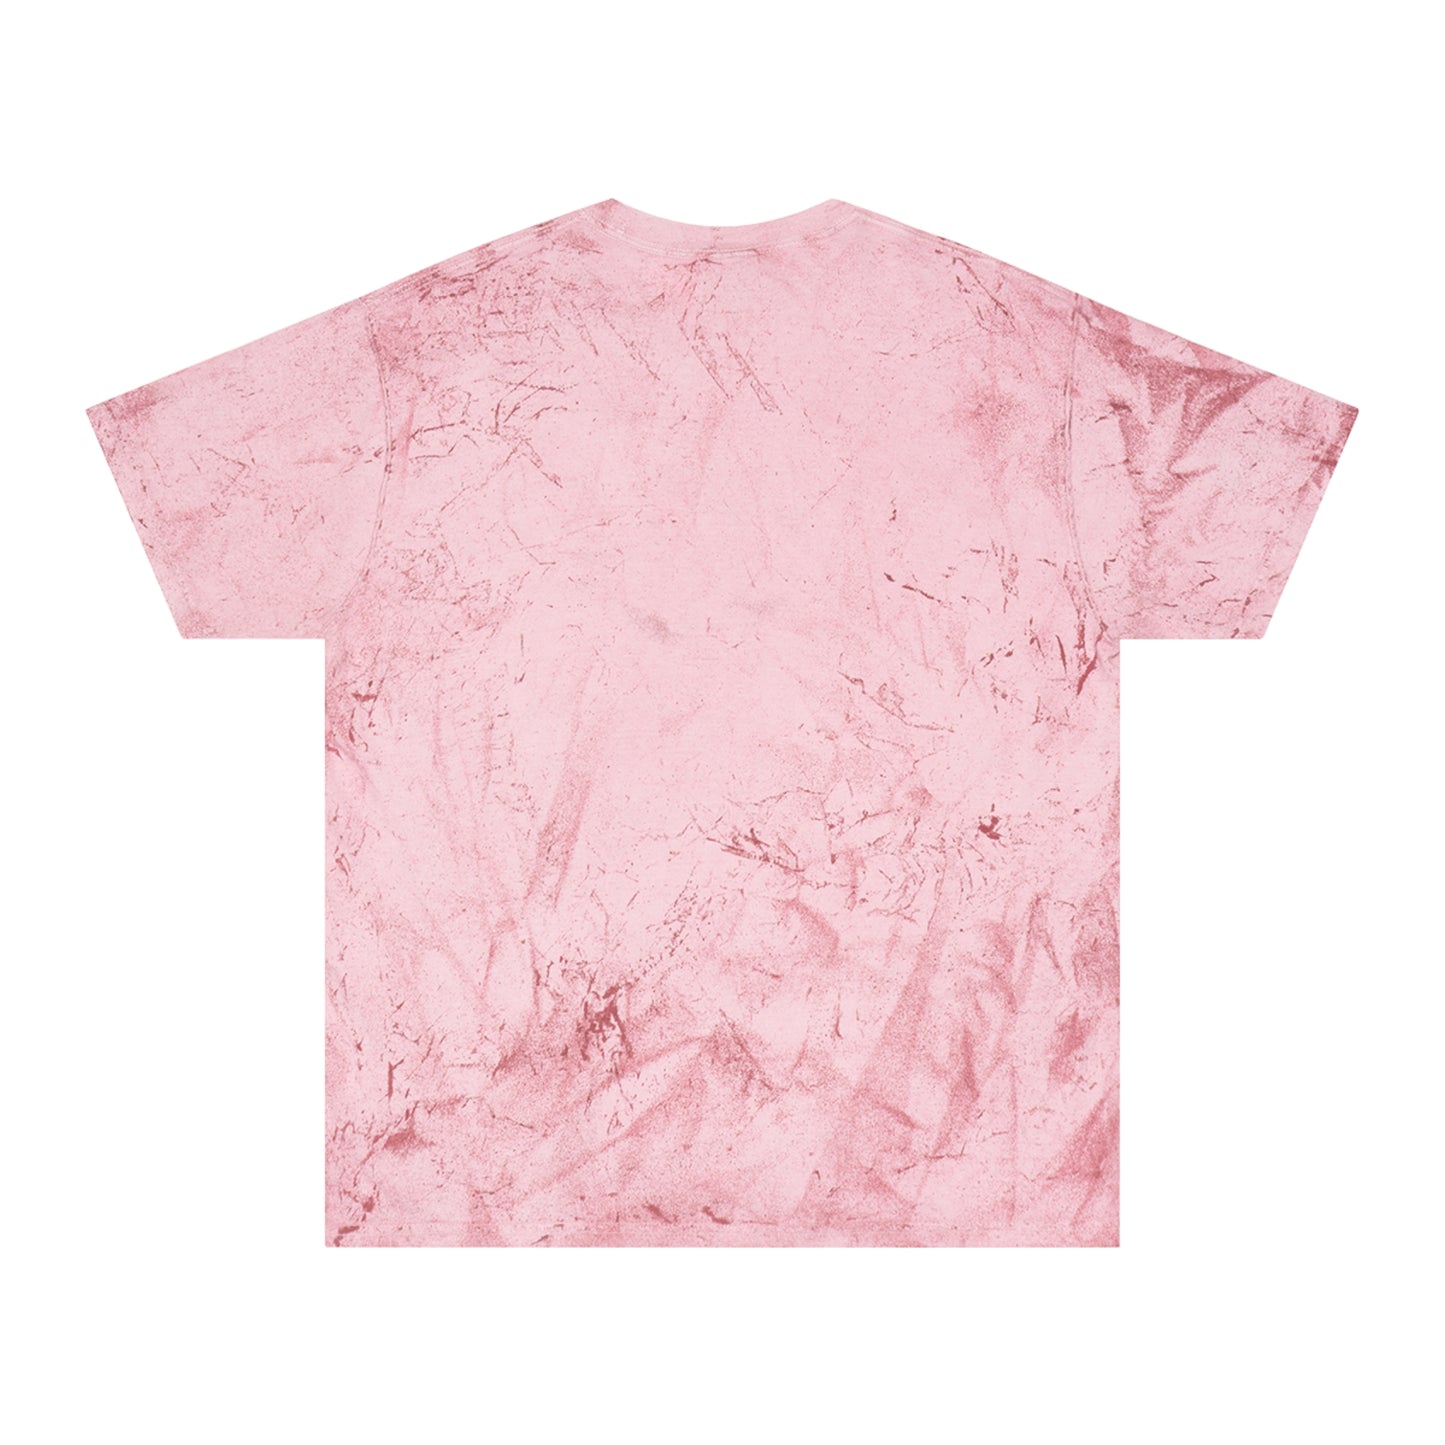 Marshmallow World - Tie Dye T-Shirt